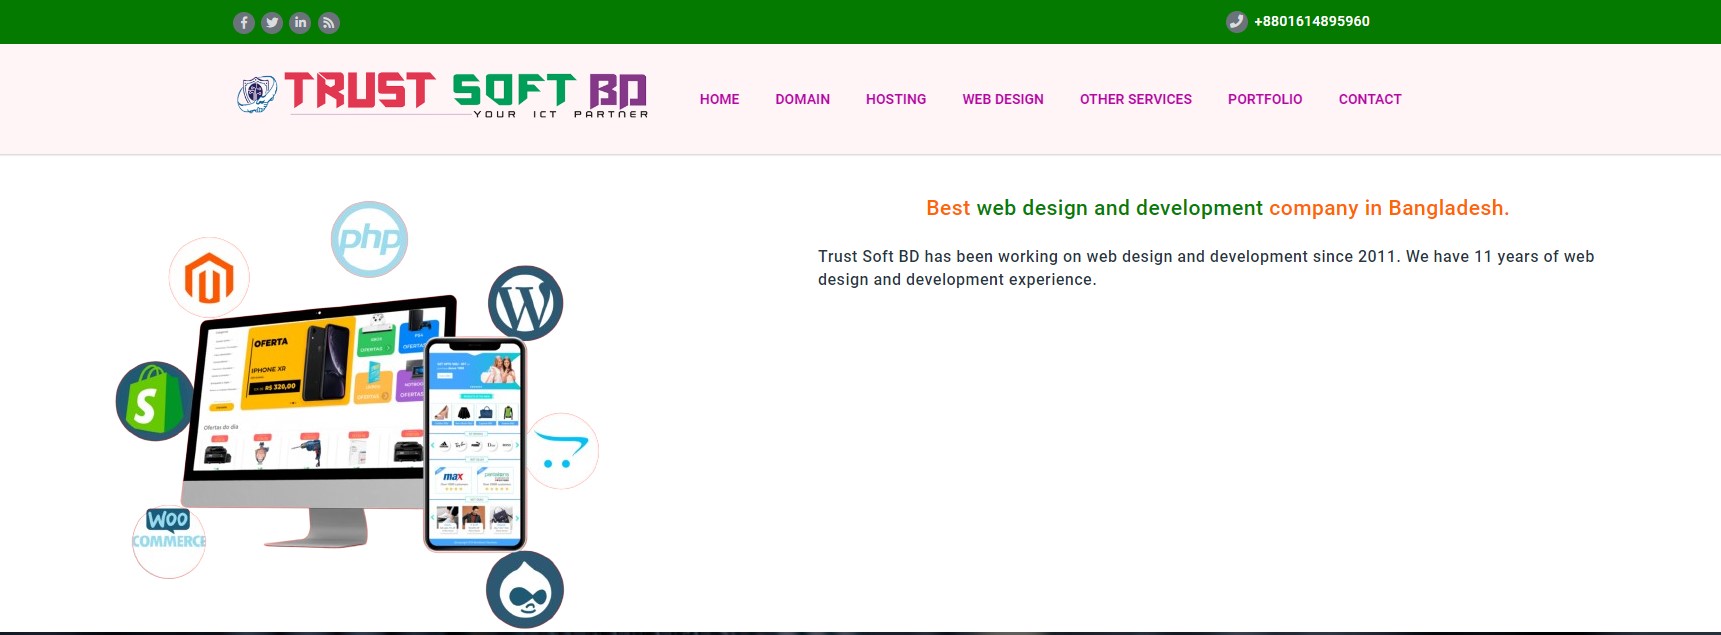 Best web design and development company in Bangladesh.